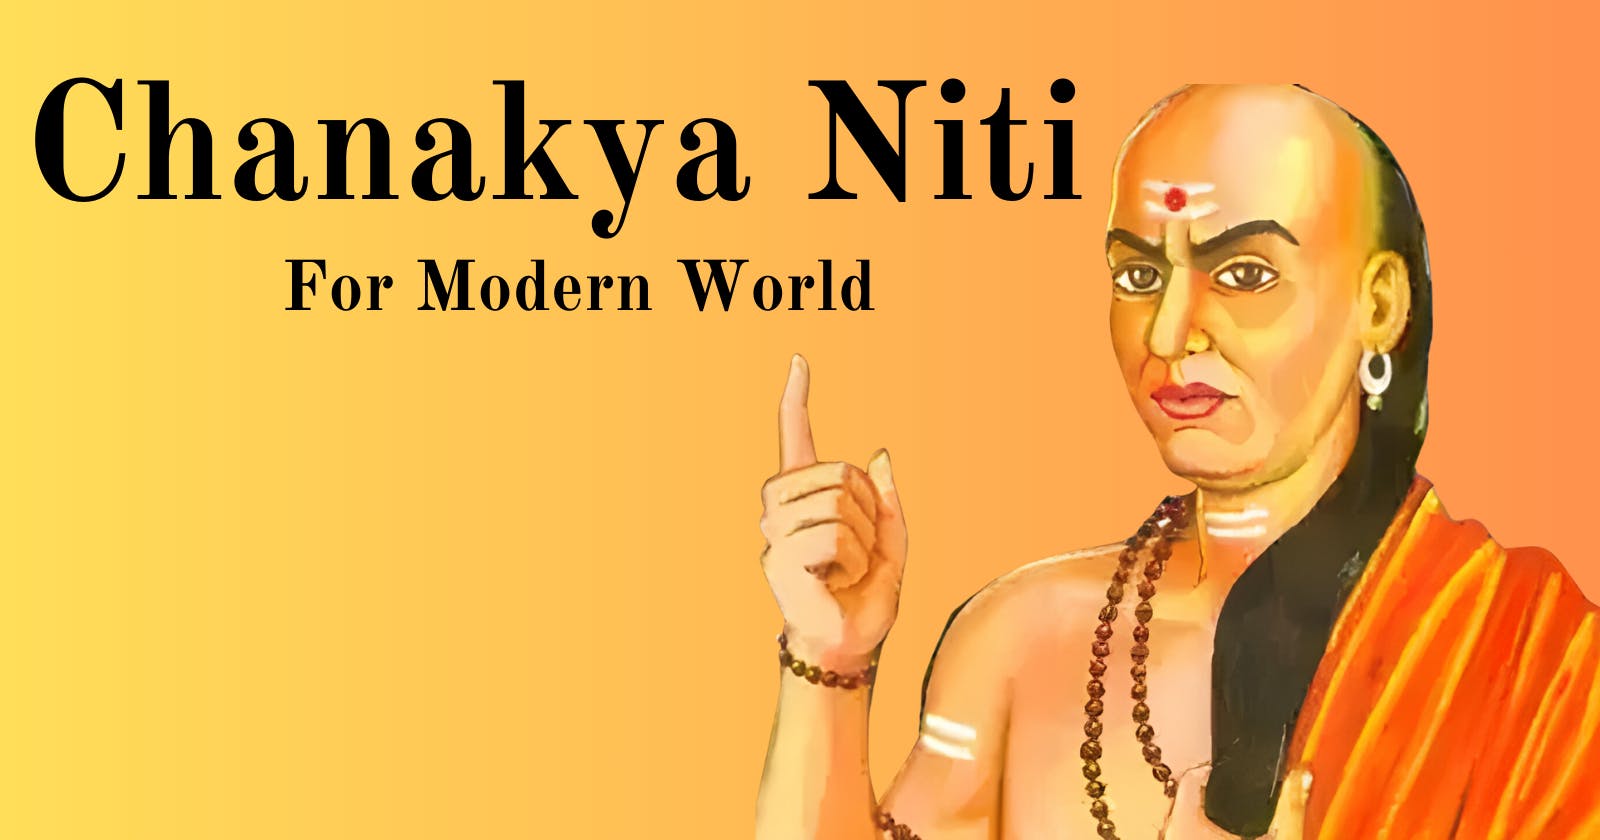 Chanakya Niti For Mordern World